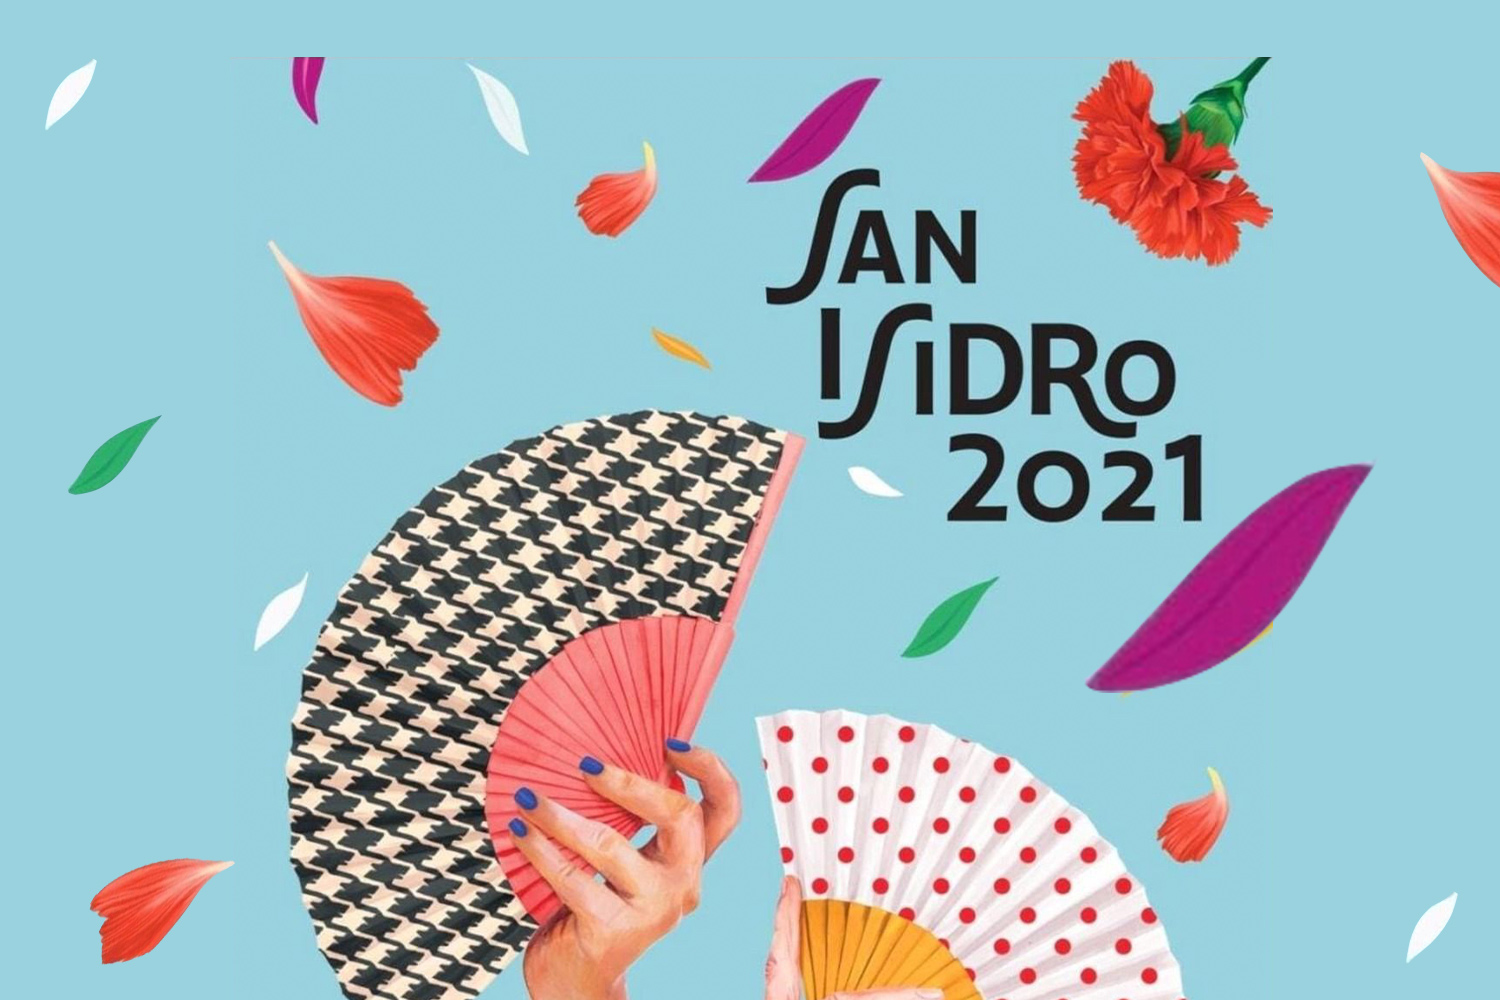 Festivities of San Isidro 2021